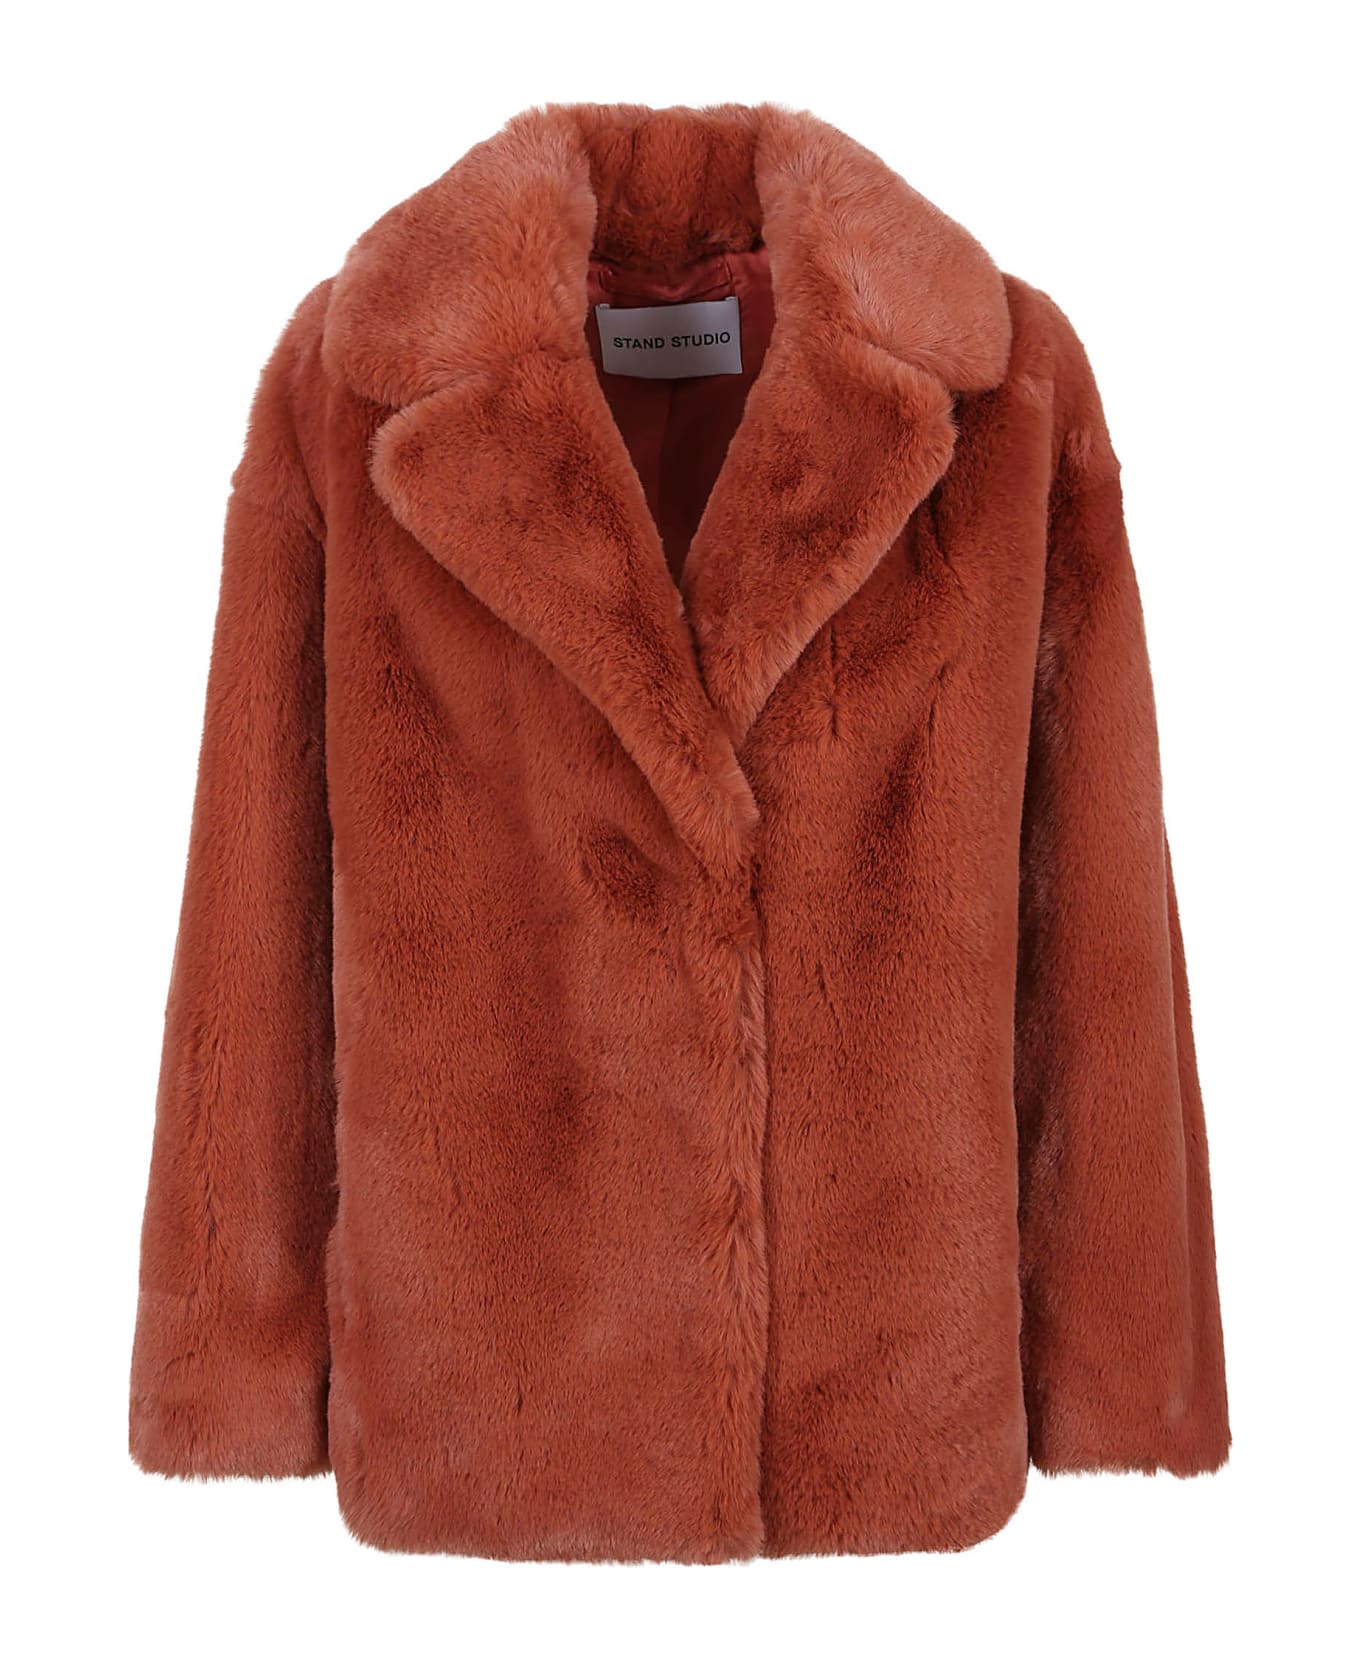 STAND STUDIO Savannah Faux Fur Jacket - Rosso コート